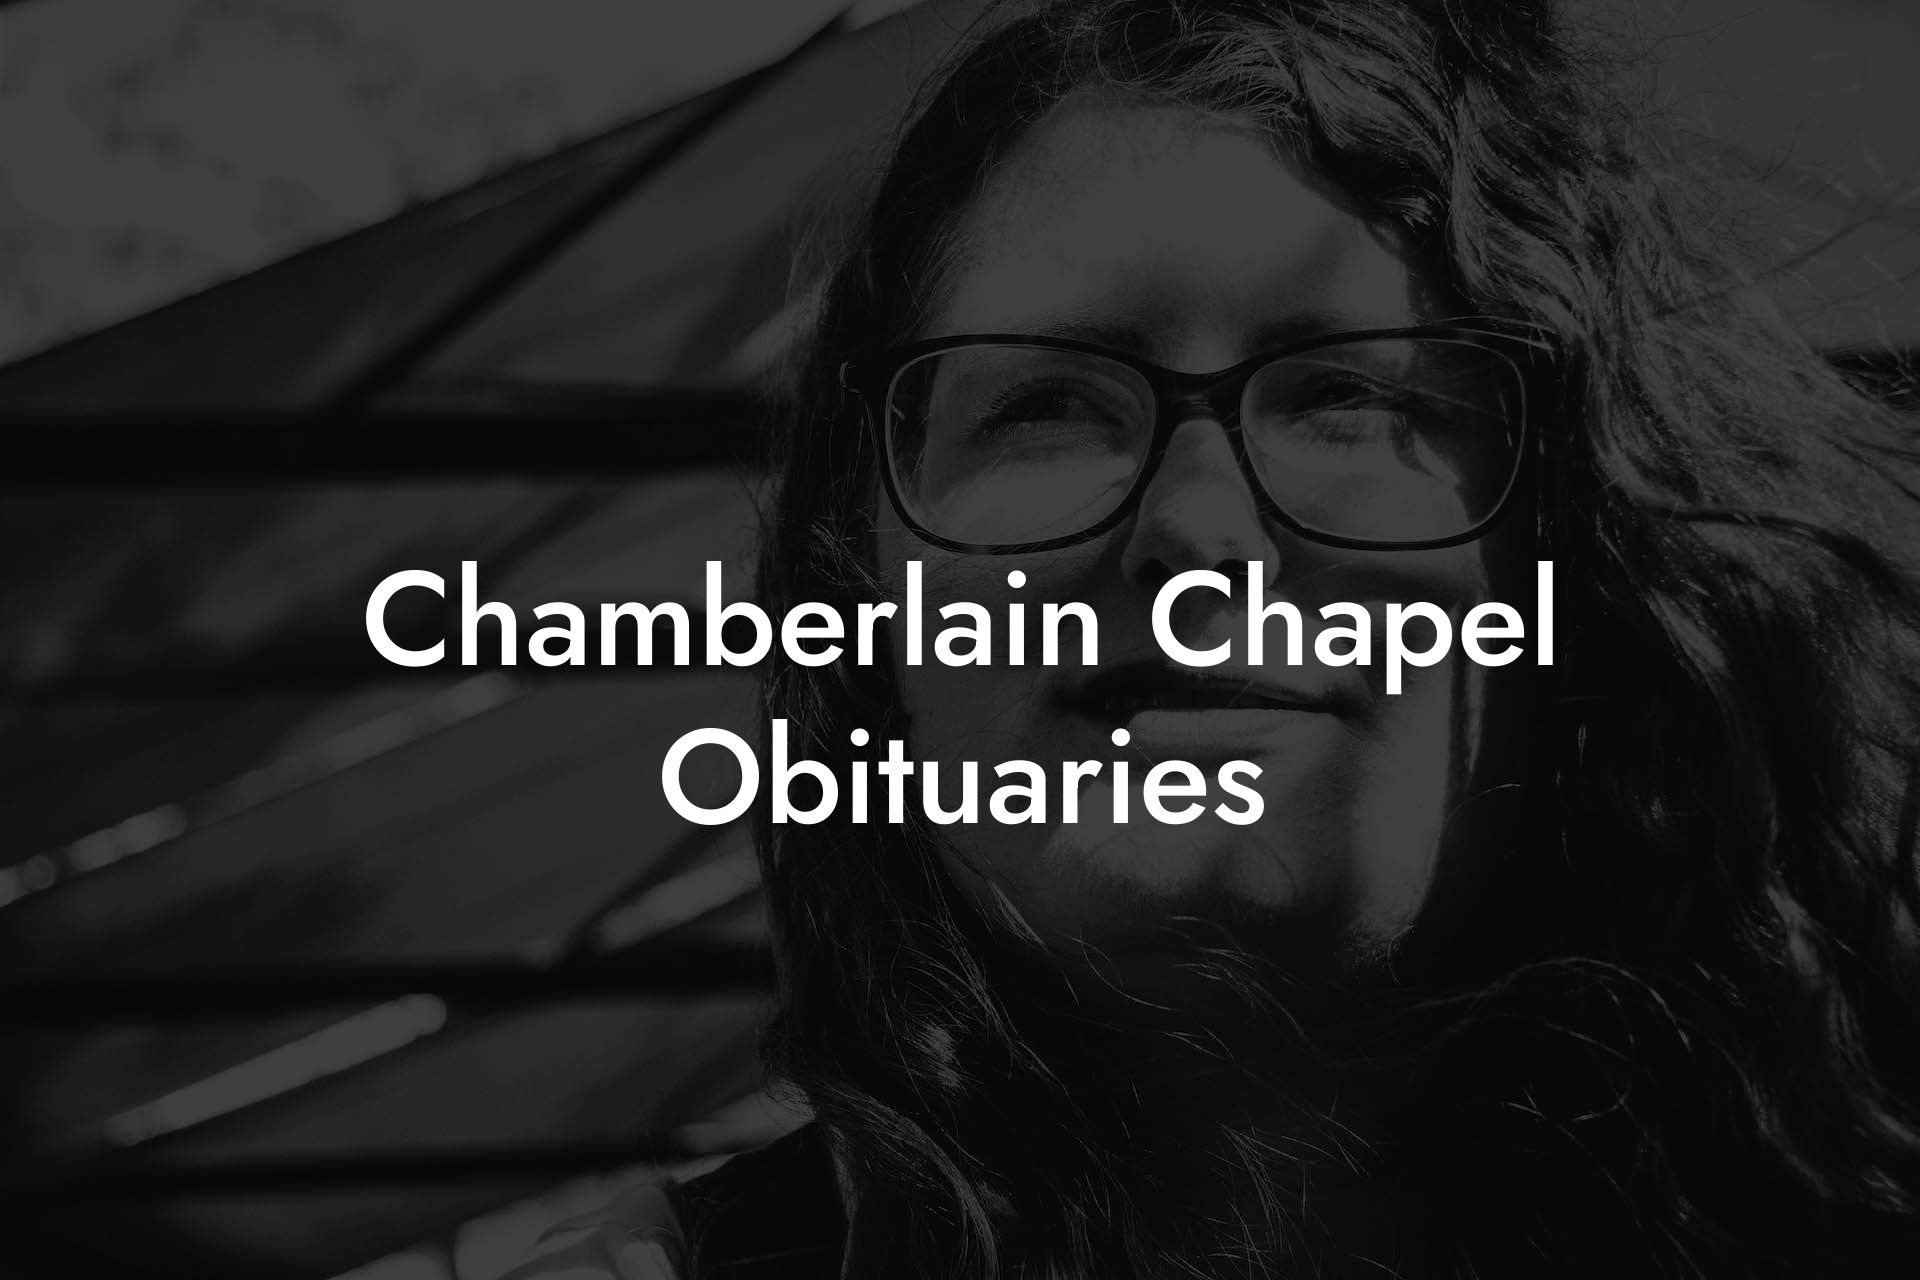 Chamberlain Chapel Obituaries